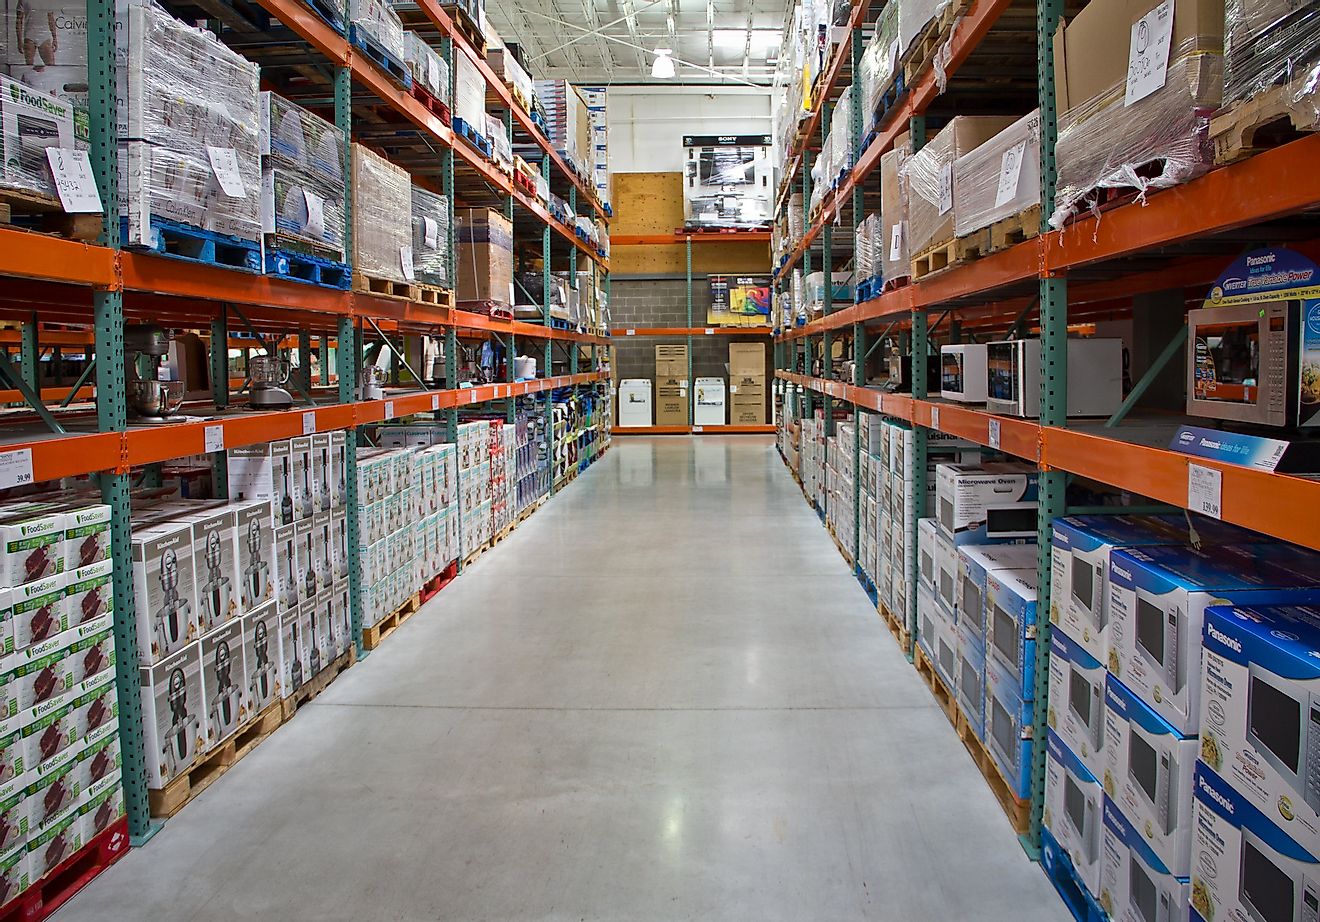 American Bulk Warehouse Shopping. Image credit: Ken Teegardin/Flickr.com